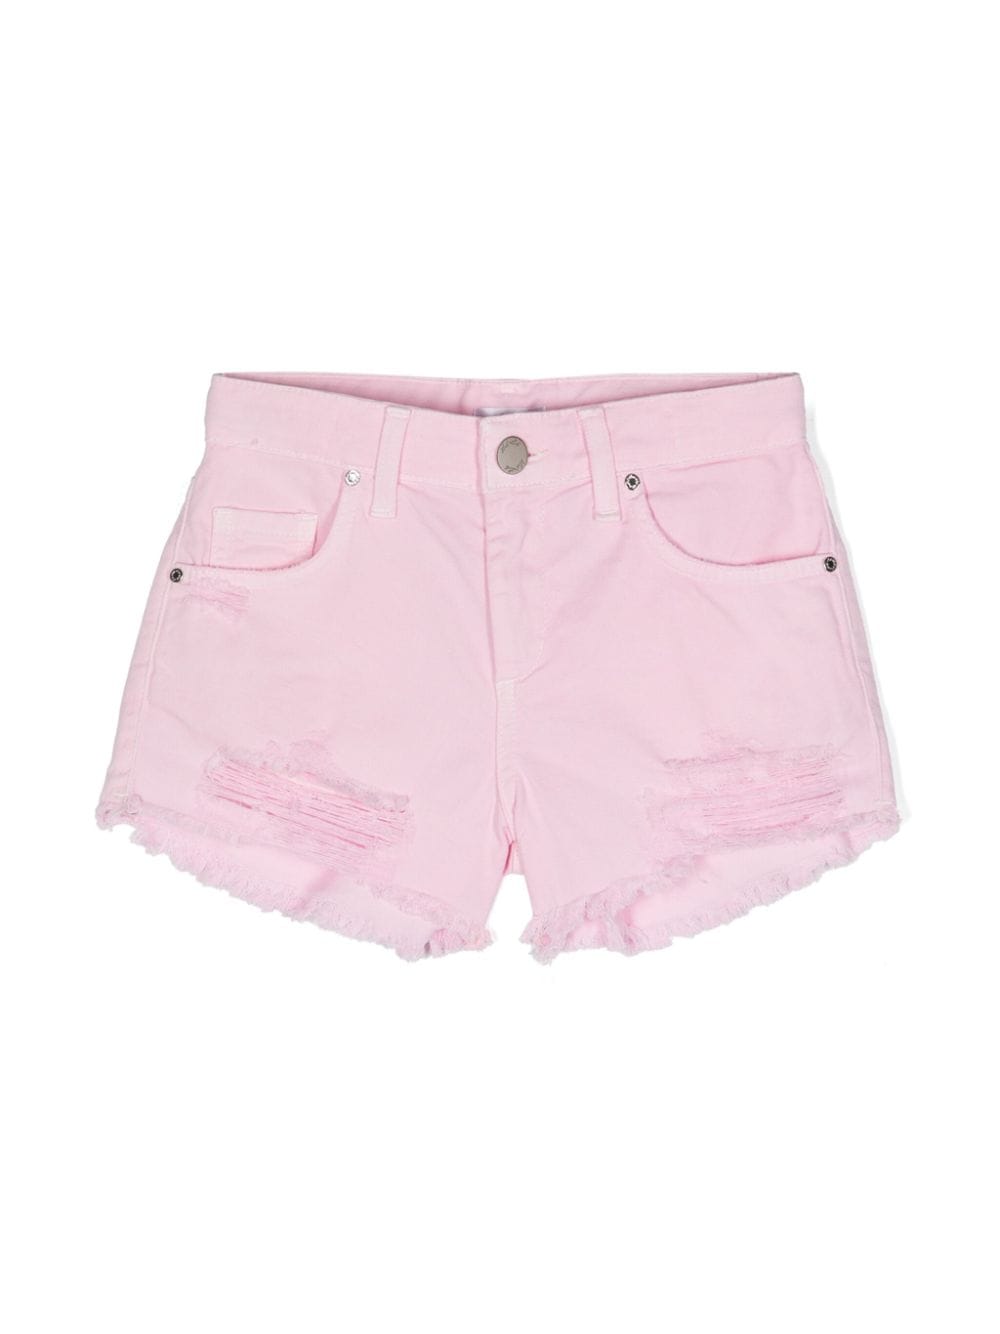 Miss Grant Kids distressed cotton shorts - Pink von Miss Grant Kids